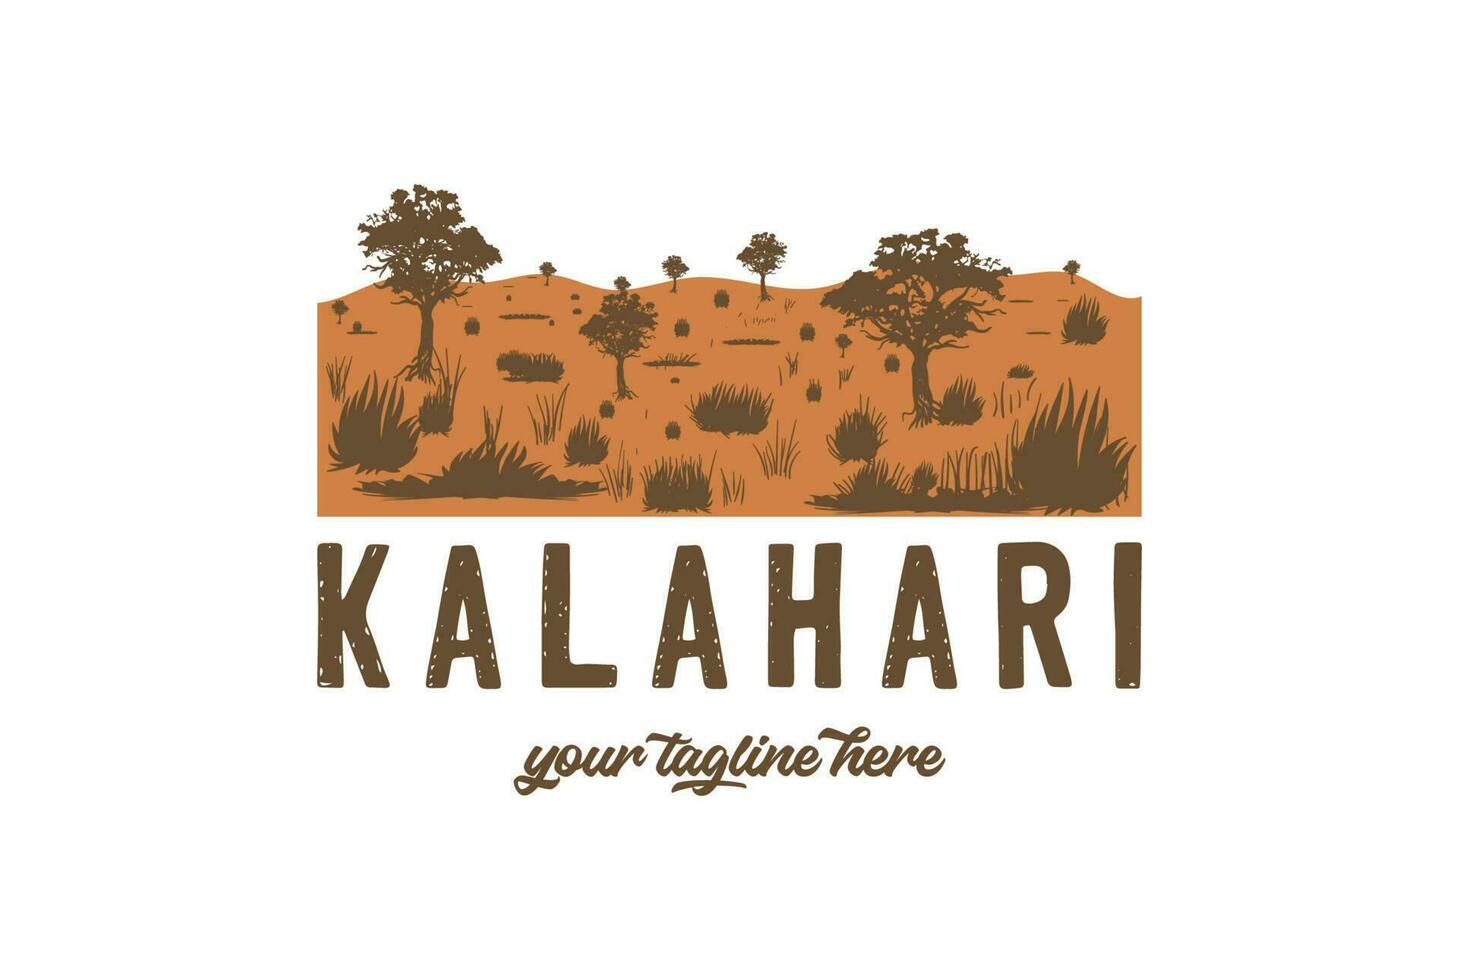 Vintage Retro African Kalahari Desert National Park for Outdoor Adventure T Shirt Logo Illustration vector